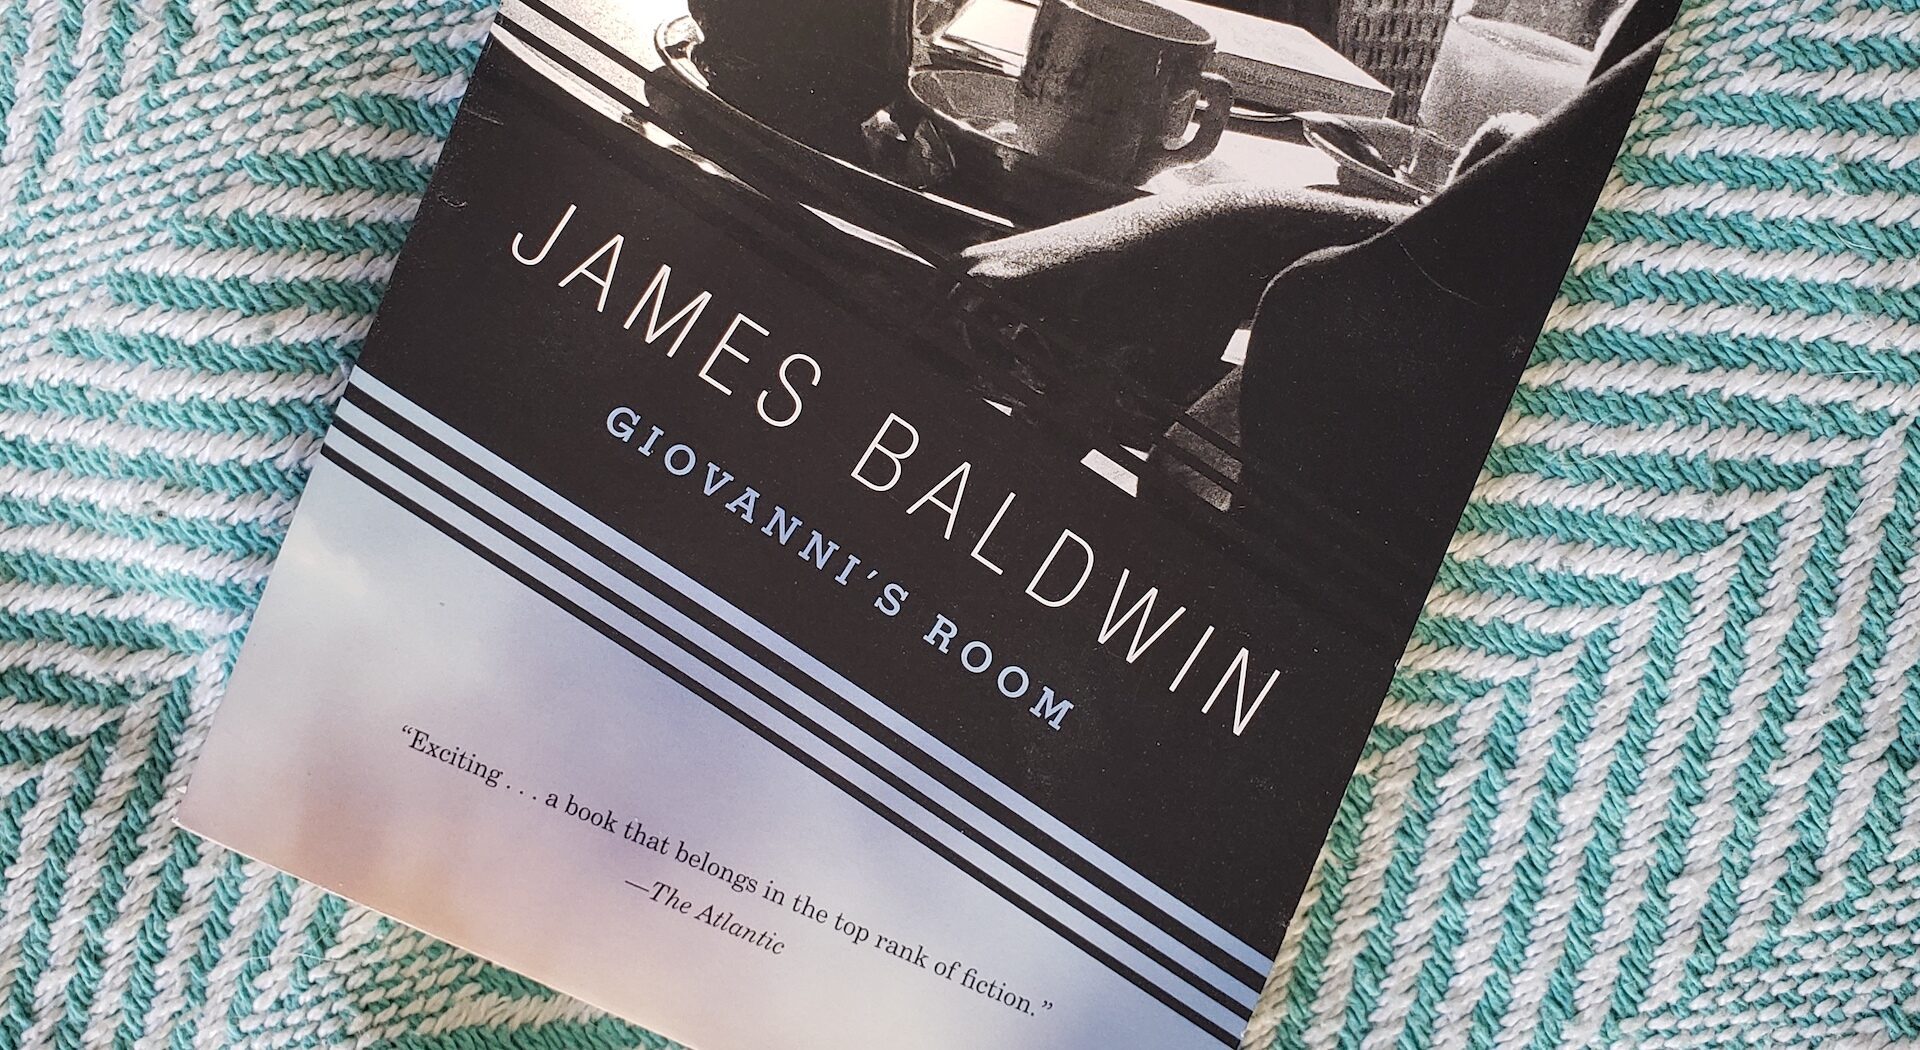 113: Giovanni’s Room by James Baldwin